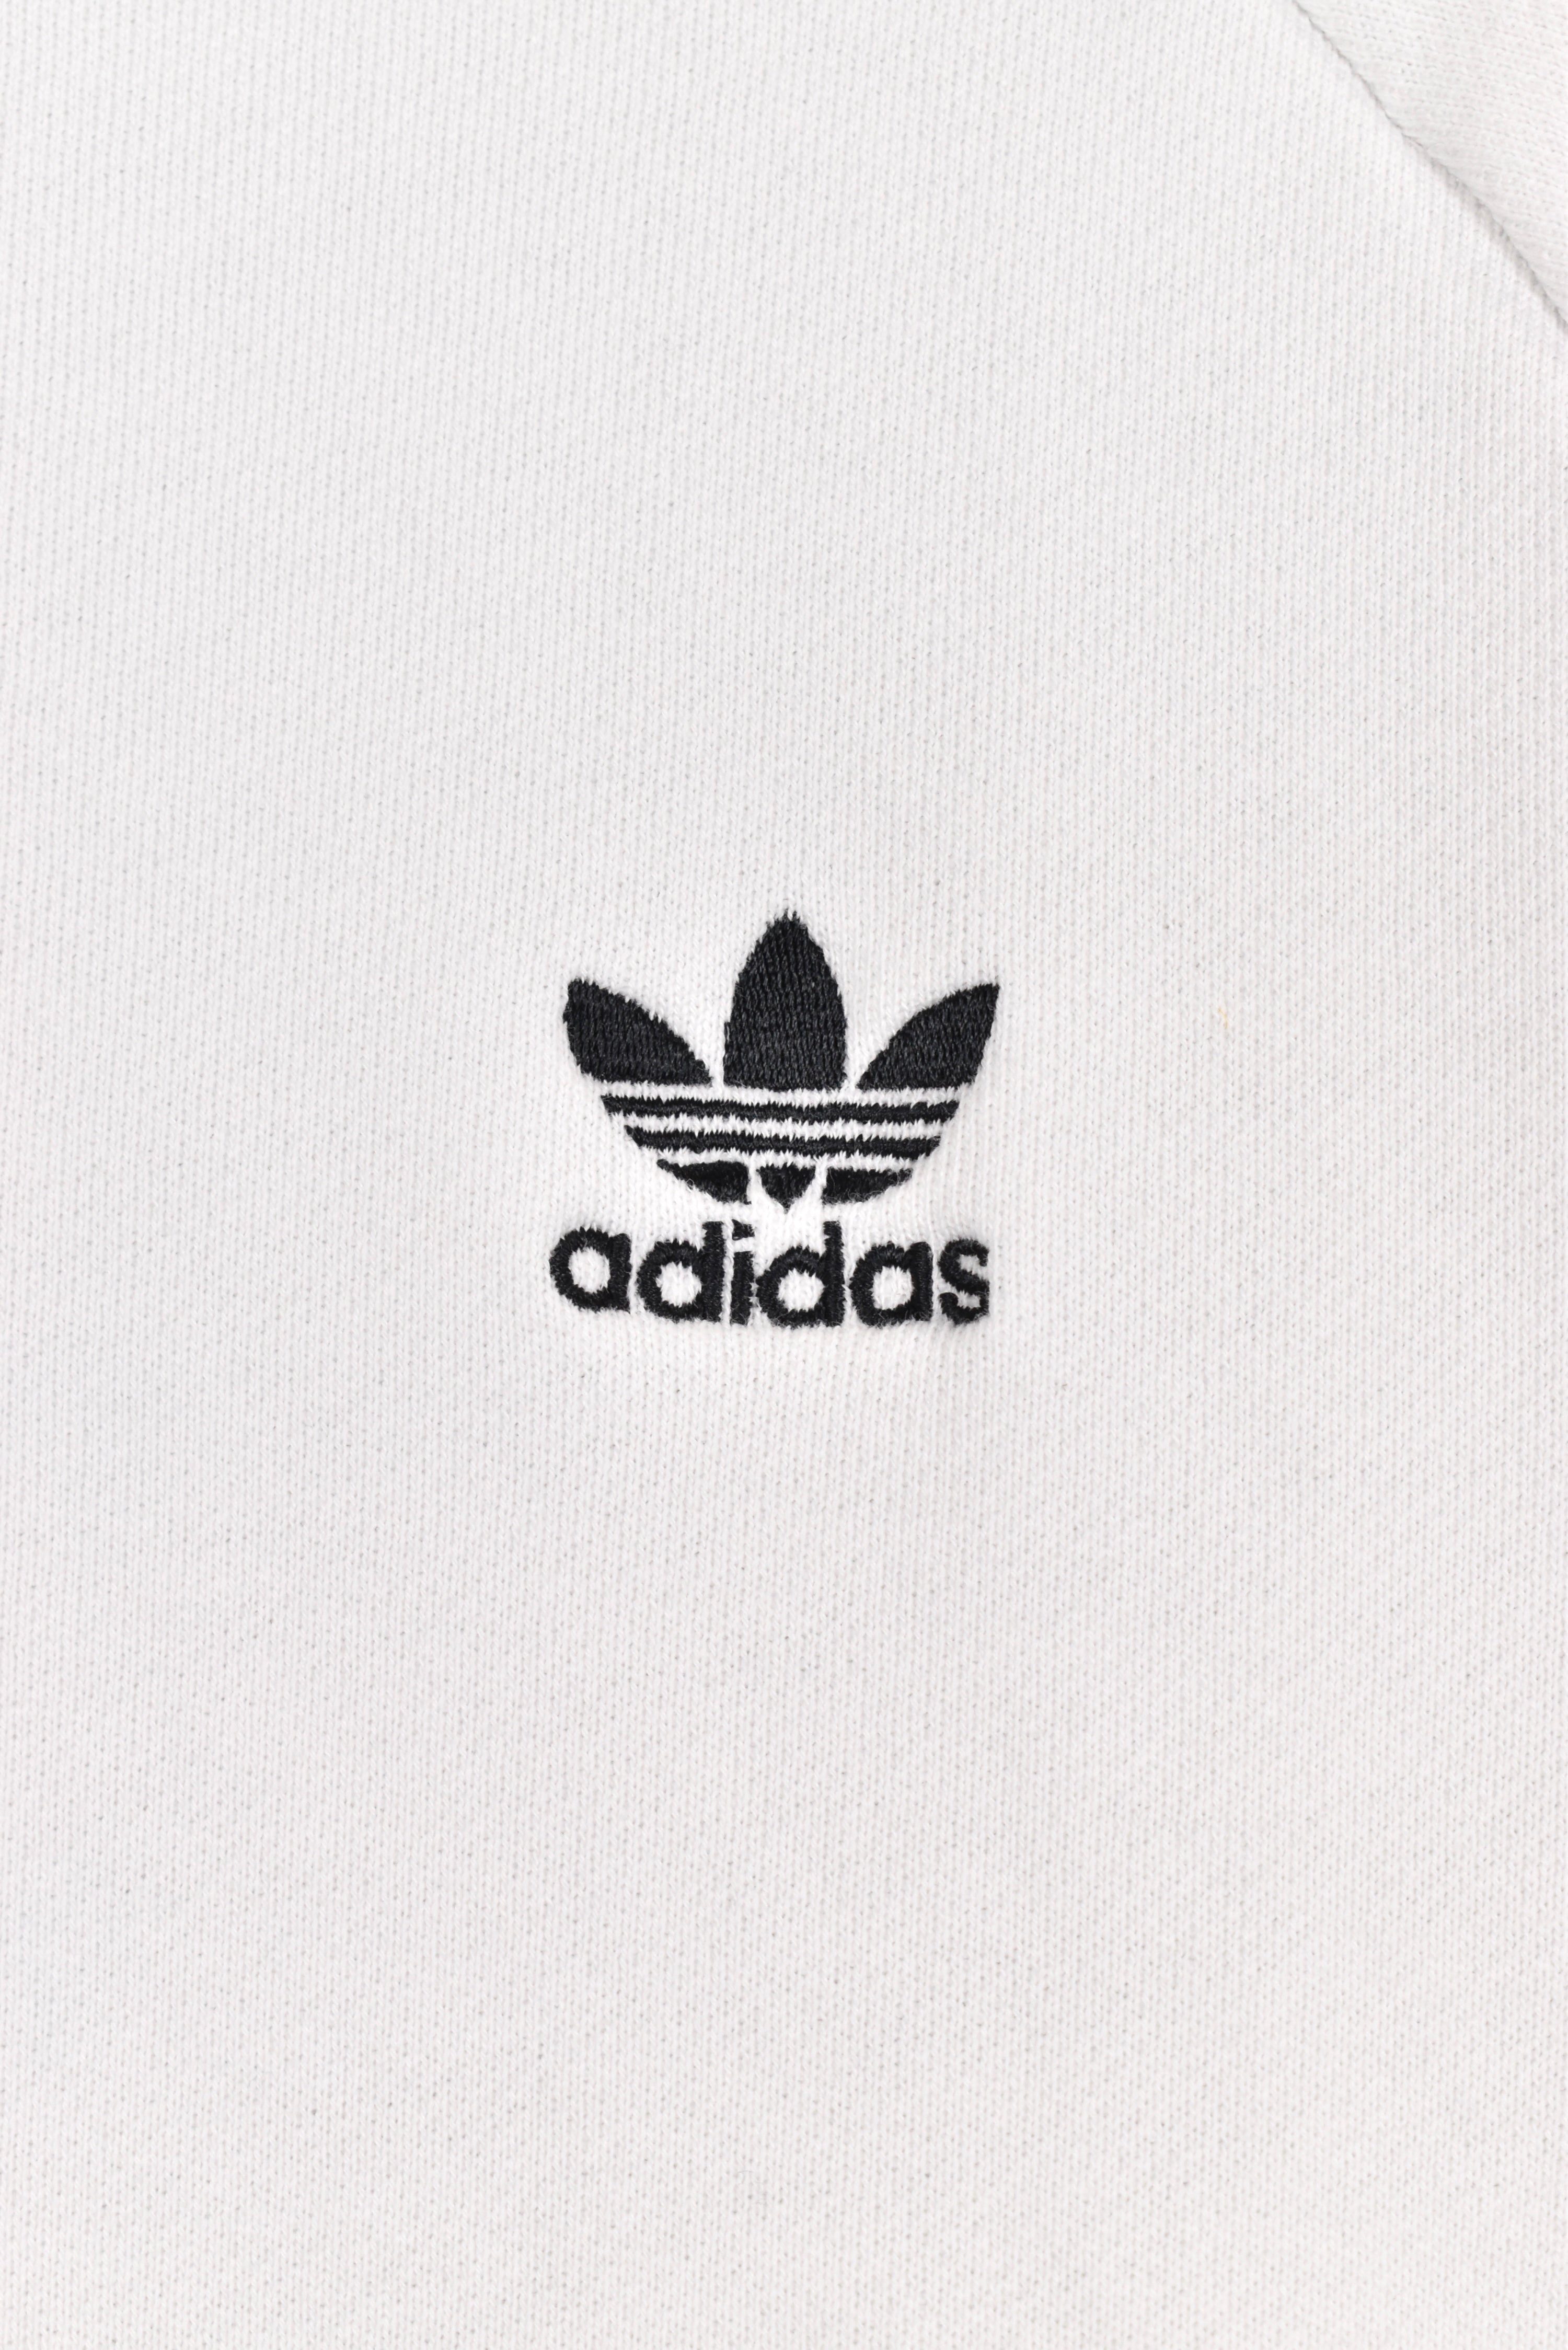 Vintage Adidas sweatshirt, white embroidered crewneck - AU XL ADIDAS